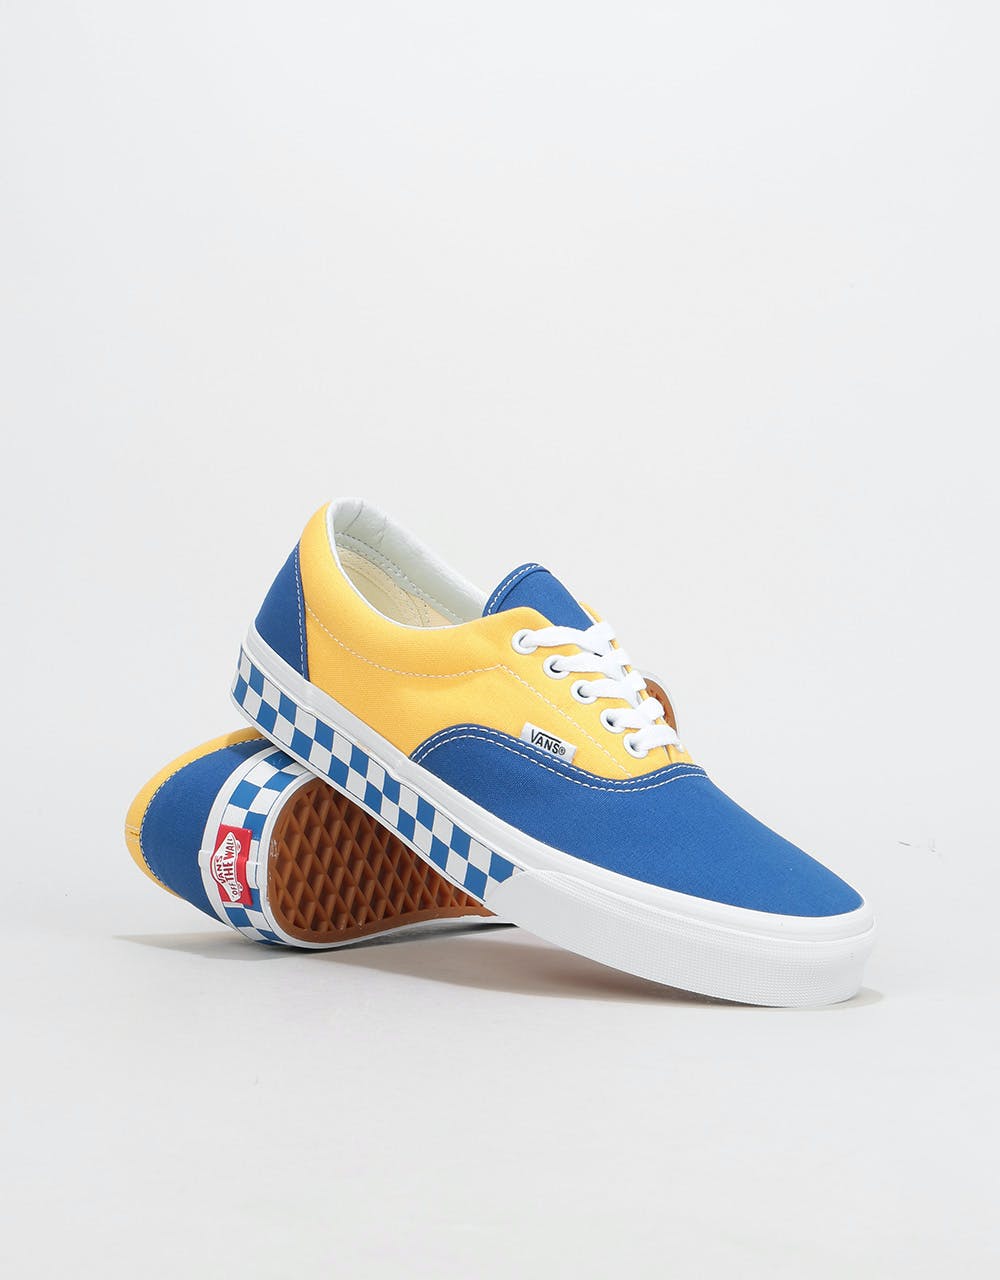 Vans Era Skate Shoes - (BMX Checkerboard) True Blue/Yellow